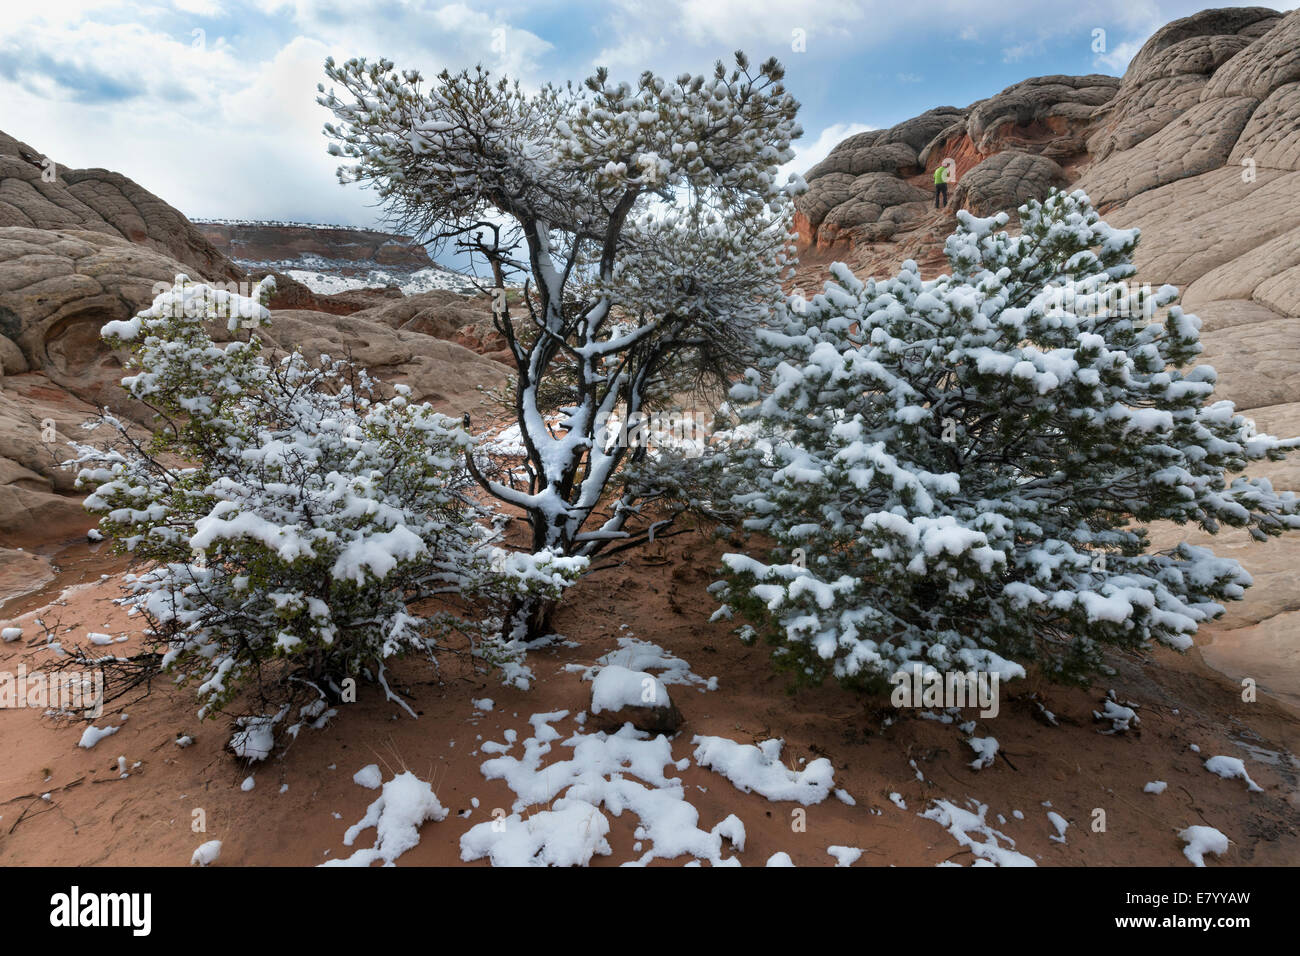 Snow in the high desert, White Pocket, Vermillion Cliffs National Monument, Arizona, USA Stock Photo